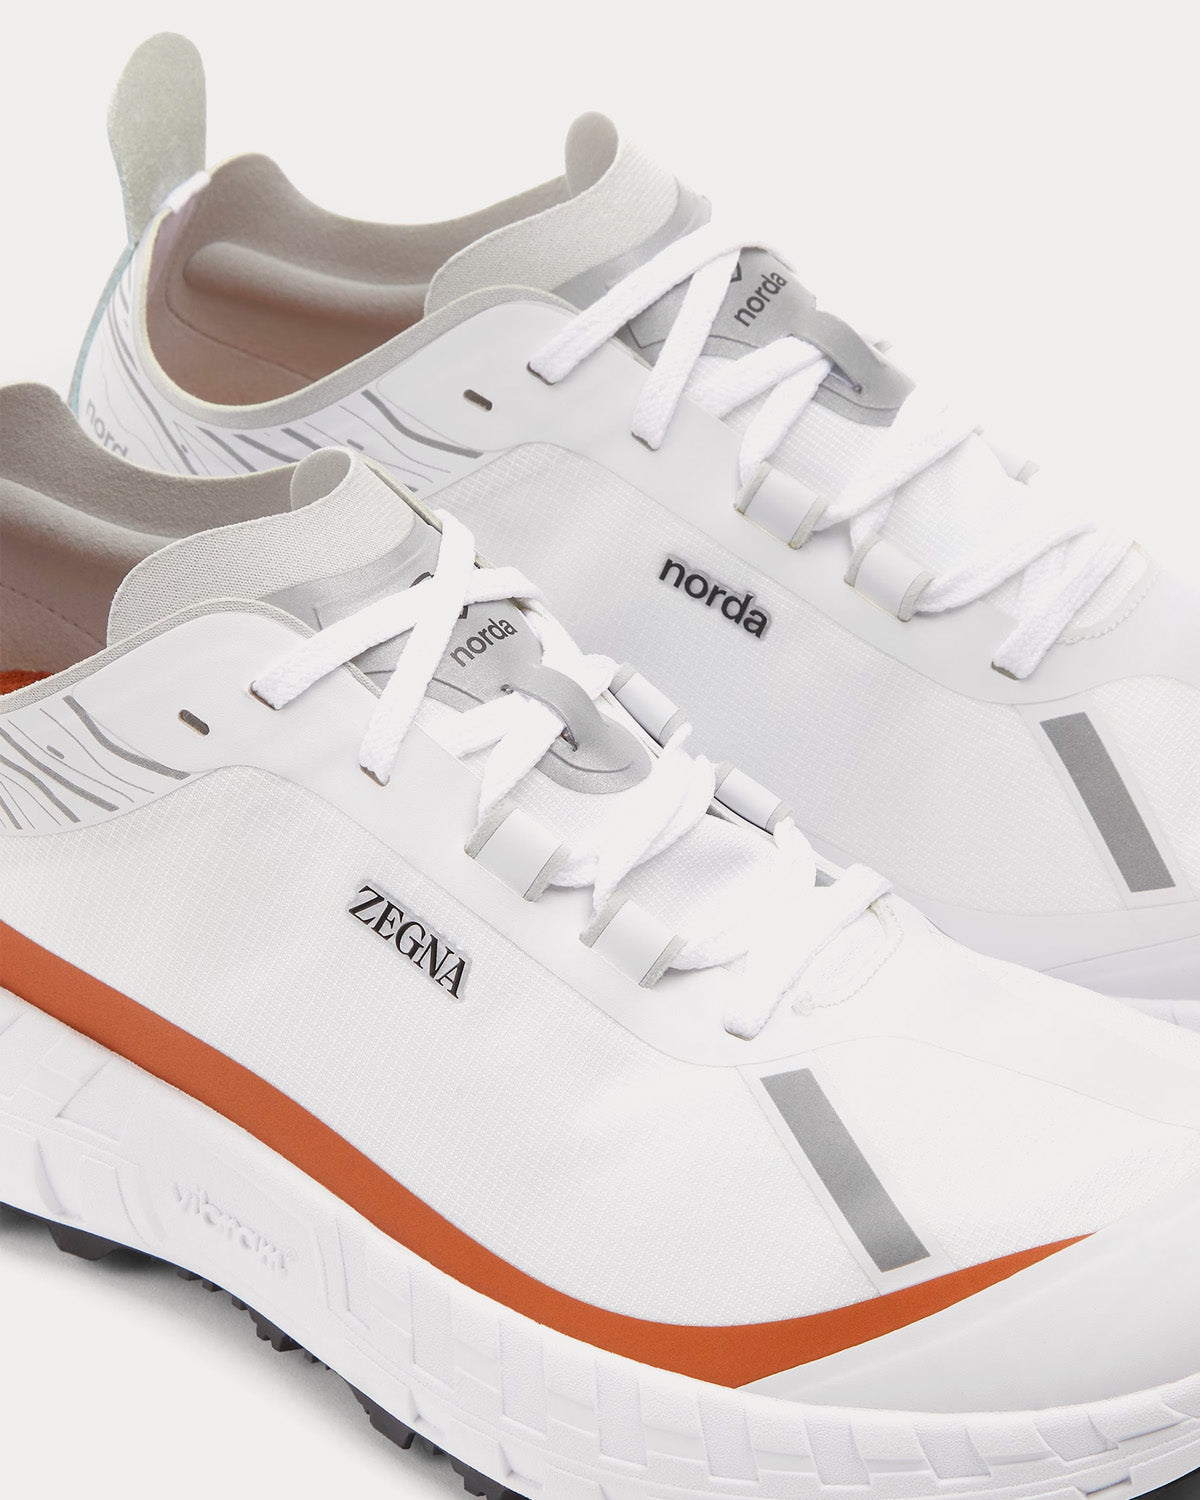 Norda x Zegna - 001 White Running Shoes